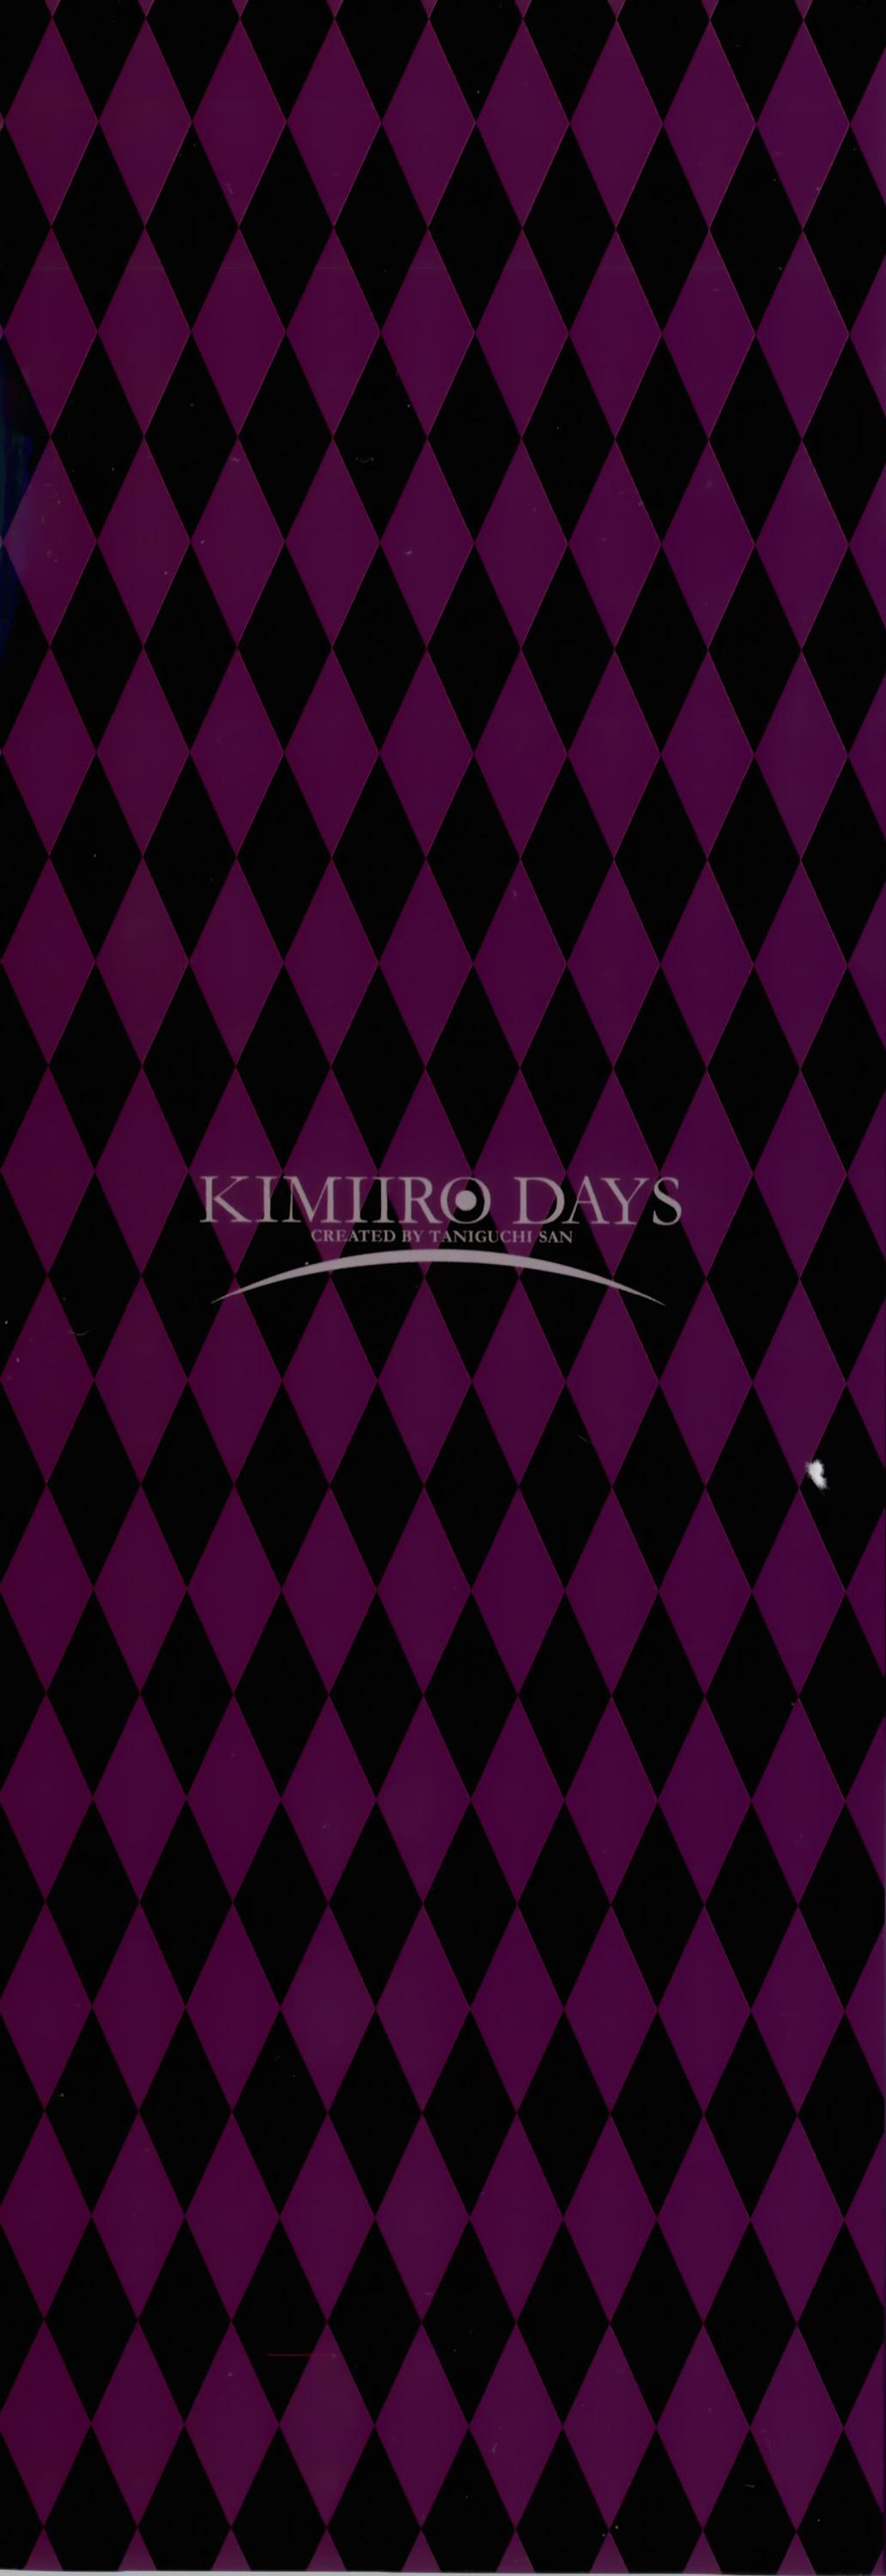 Kimi-iro Days 5